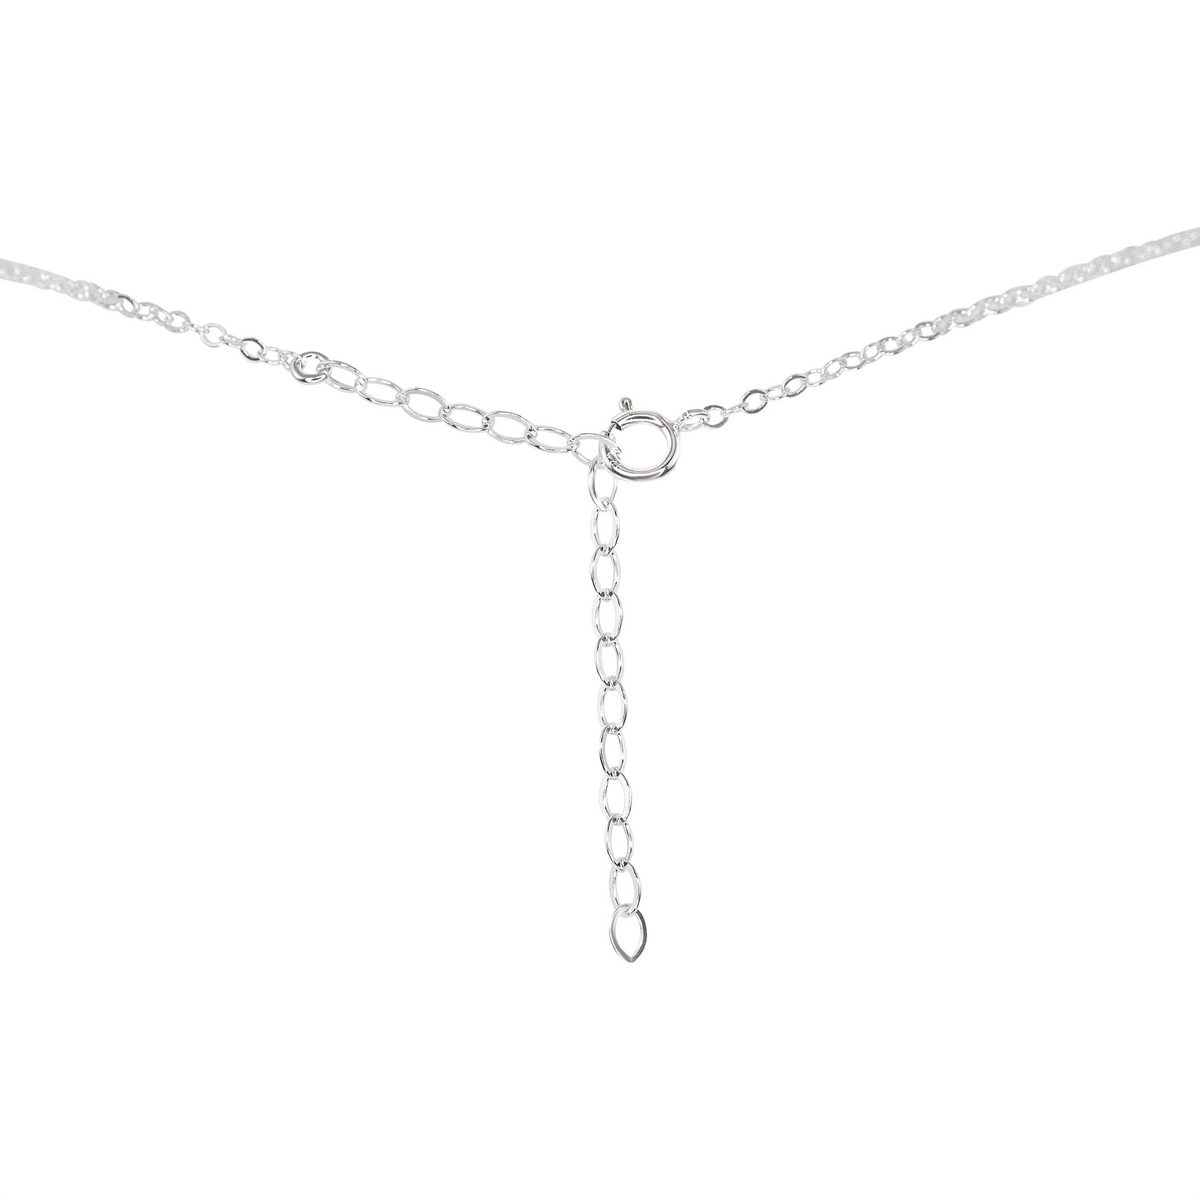 Tiny Raw Carnelian Pendant Necklace - Tiny Raw Carnelian Pendant Necklace - 14k Gold Fill / Cable - Luna Tide Handmade Crystal Jewellery